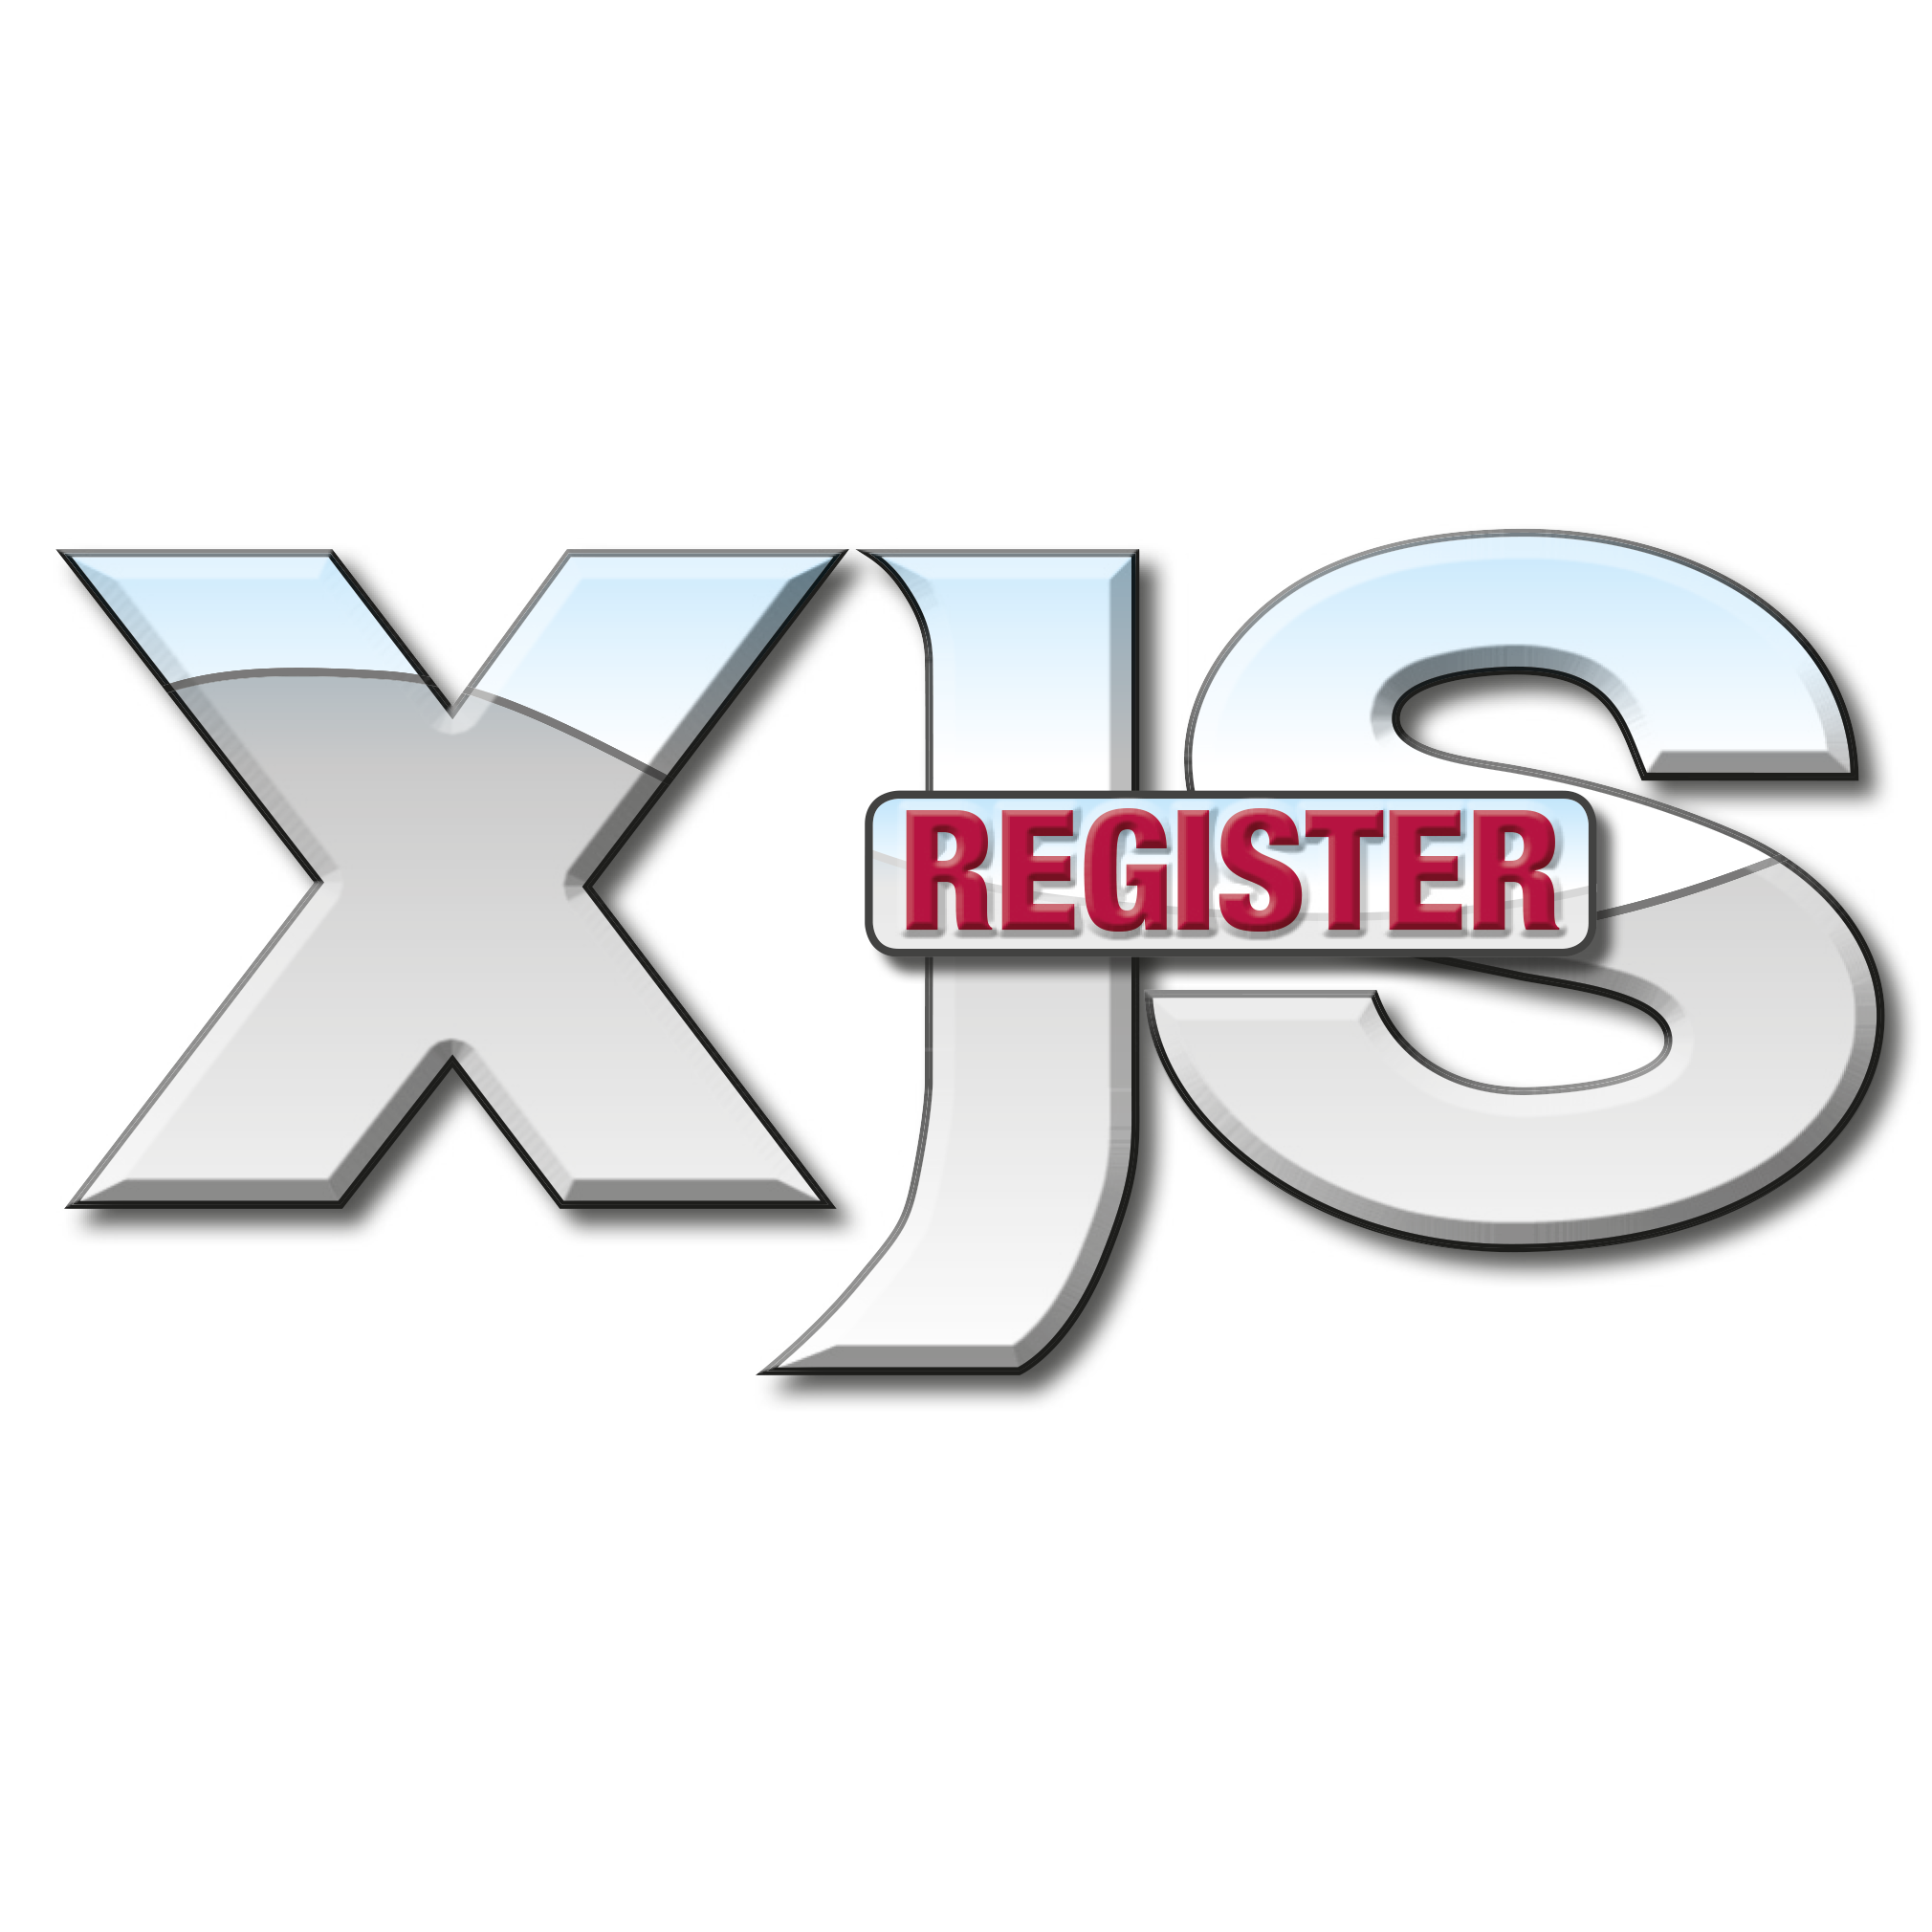 The XJS Register